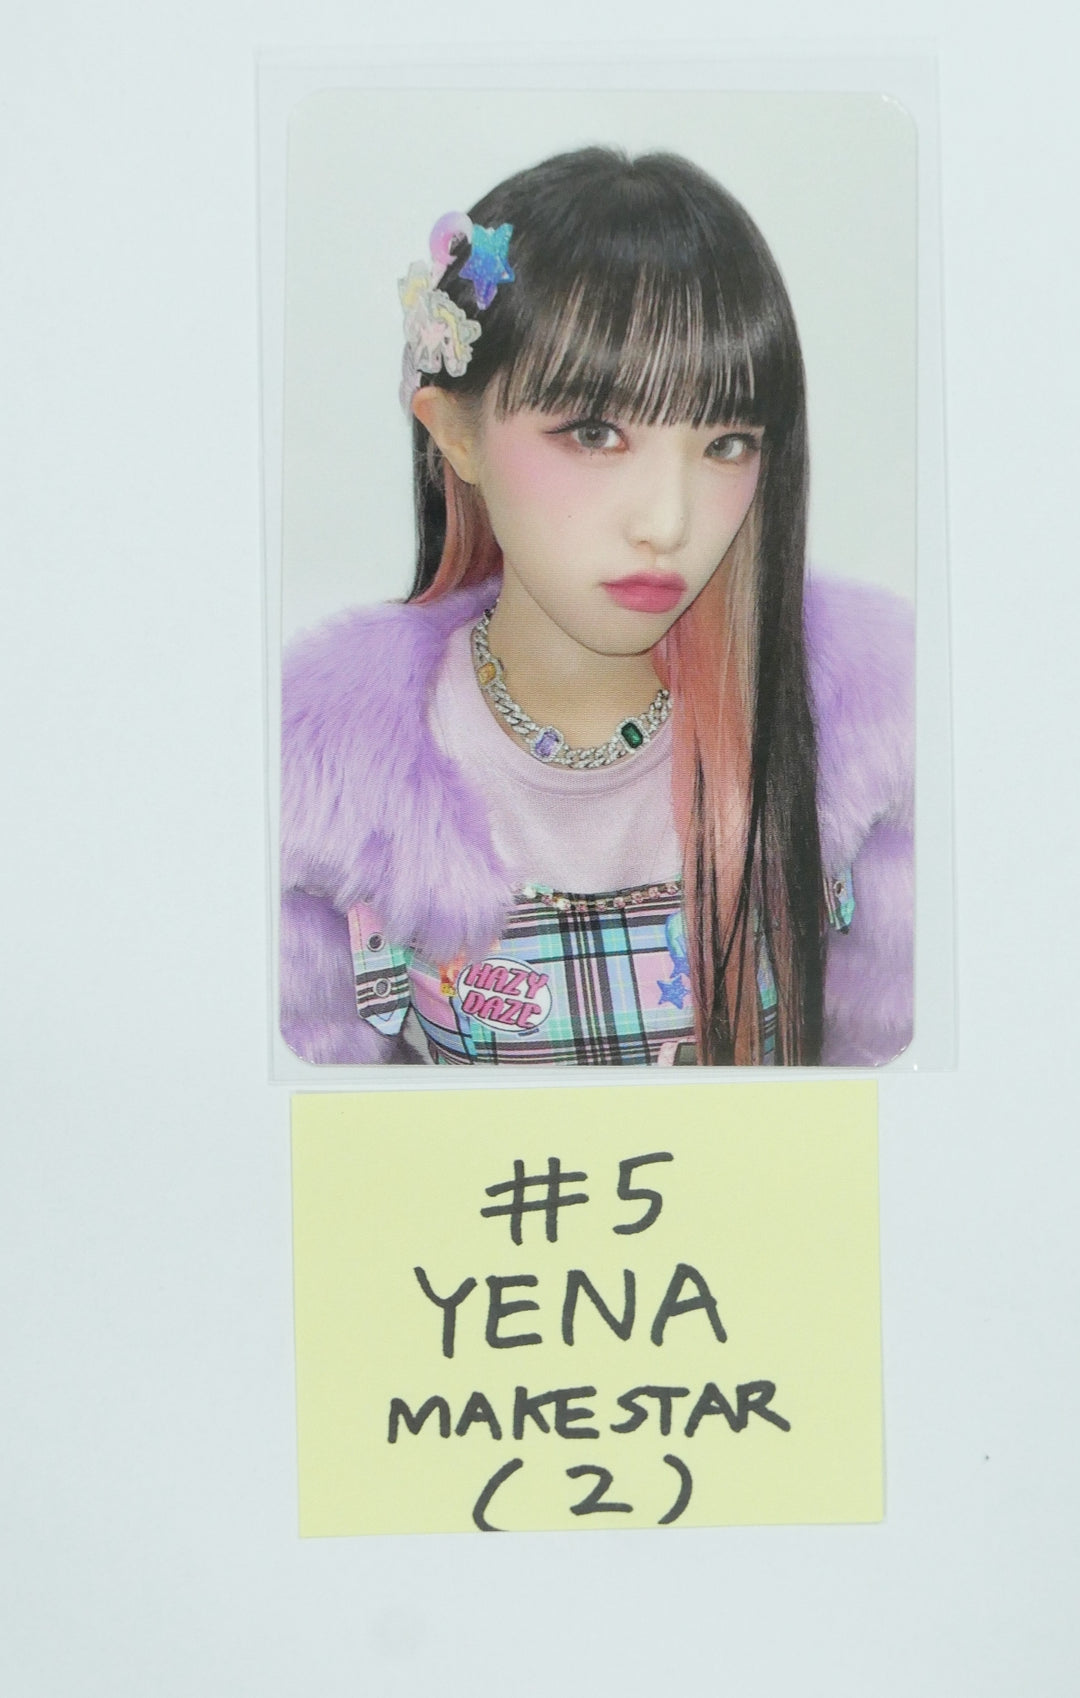 YENA "ˣ‿ˣ (SMiLEY)" - MakeStar Fansign Event Photocard